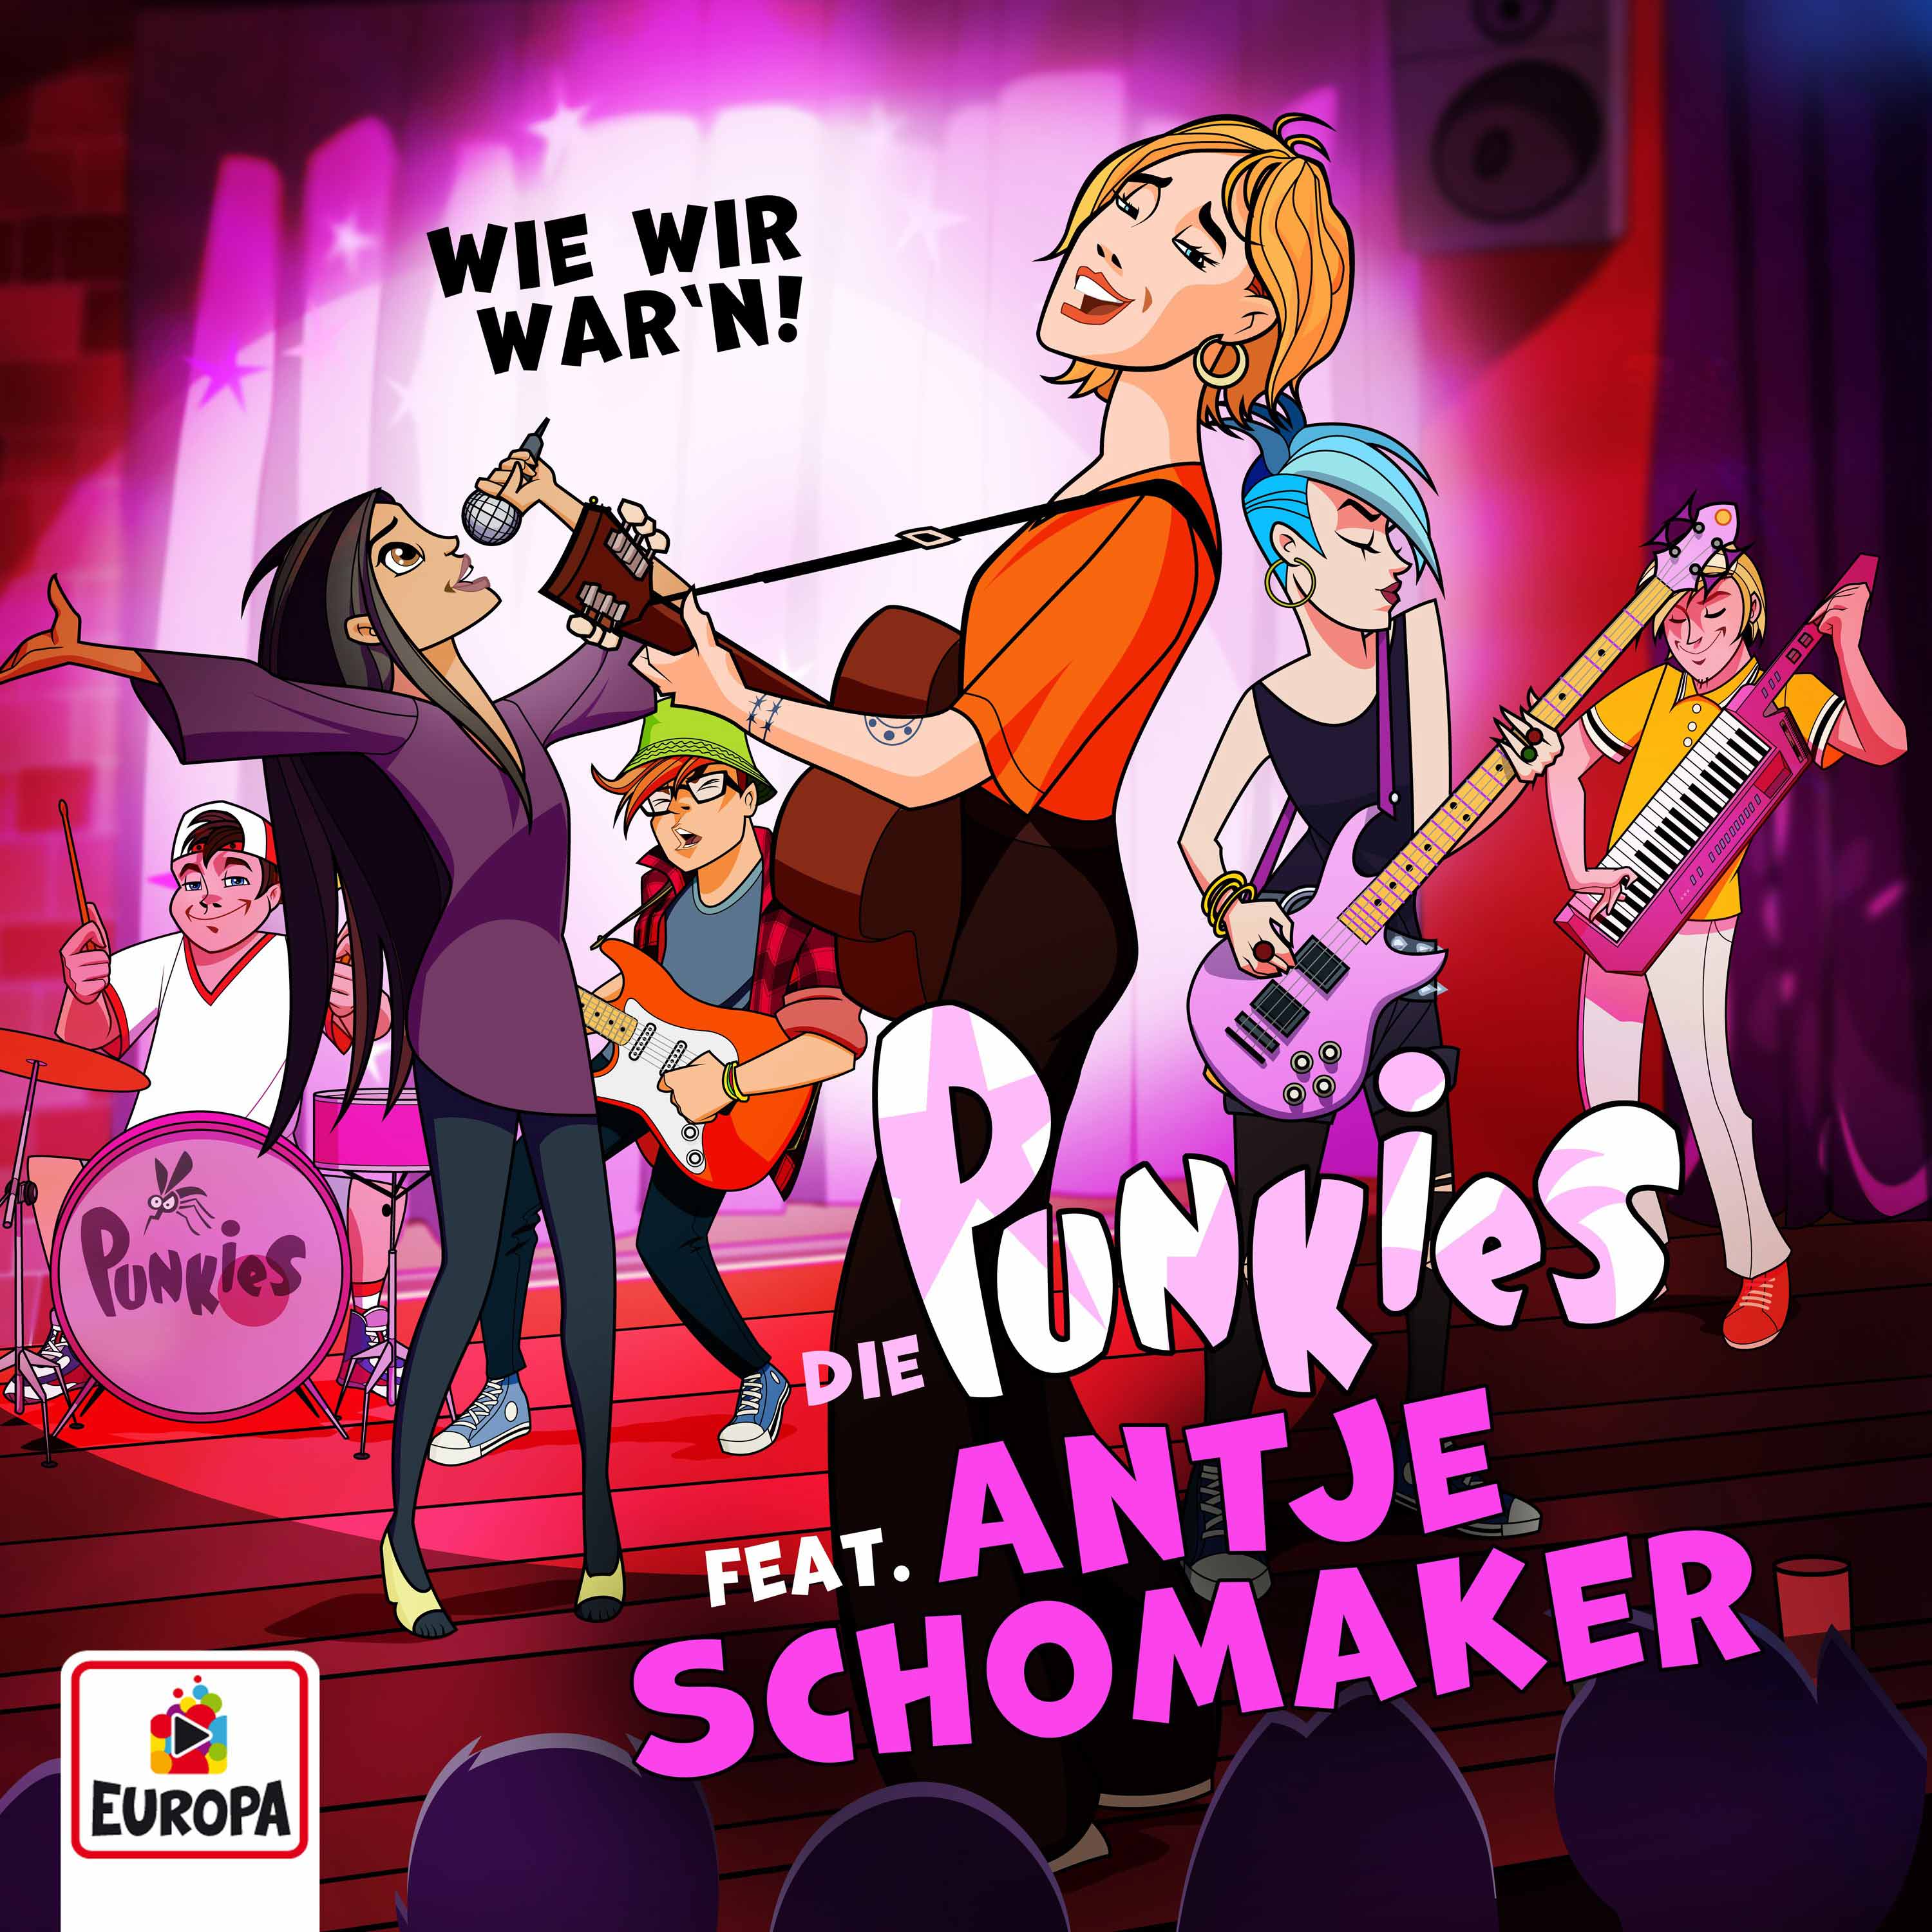 Die Punkies : Wie wir war'n (feat. Antje Schomaker)